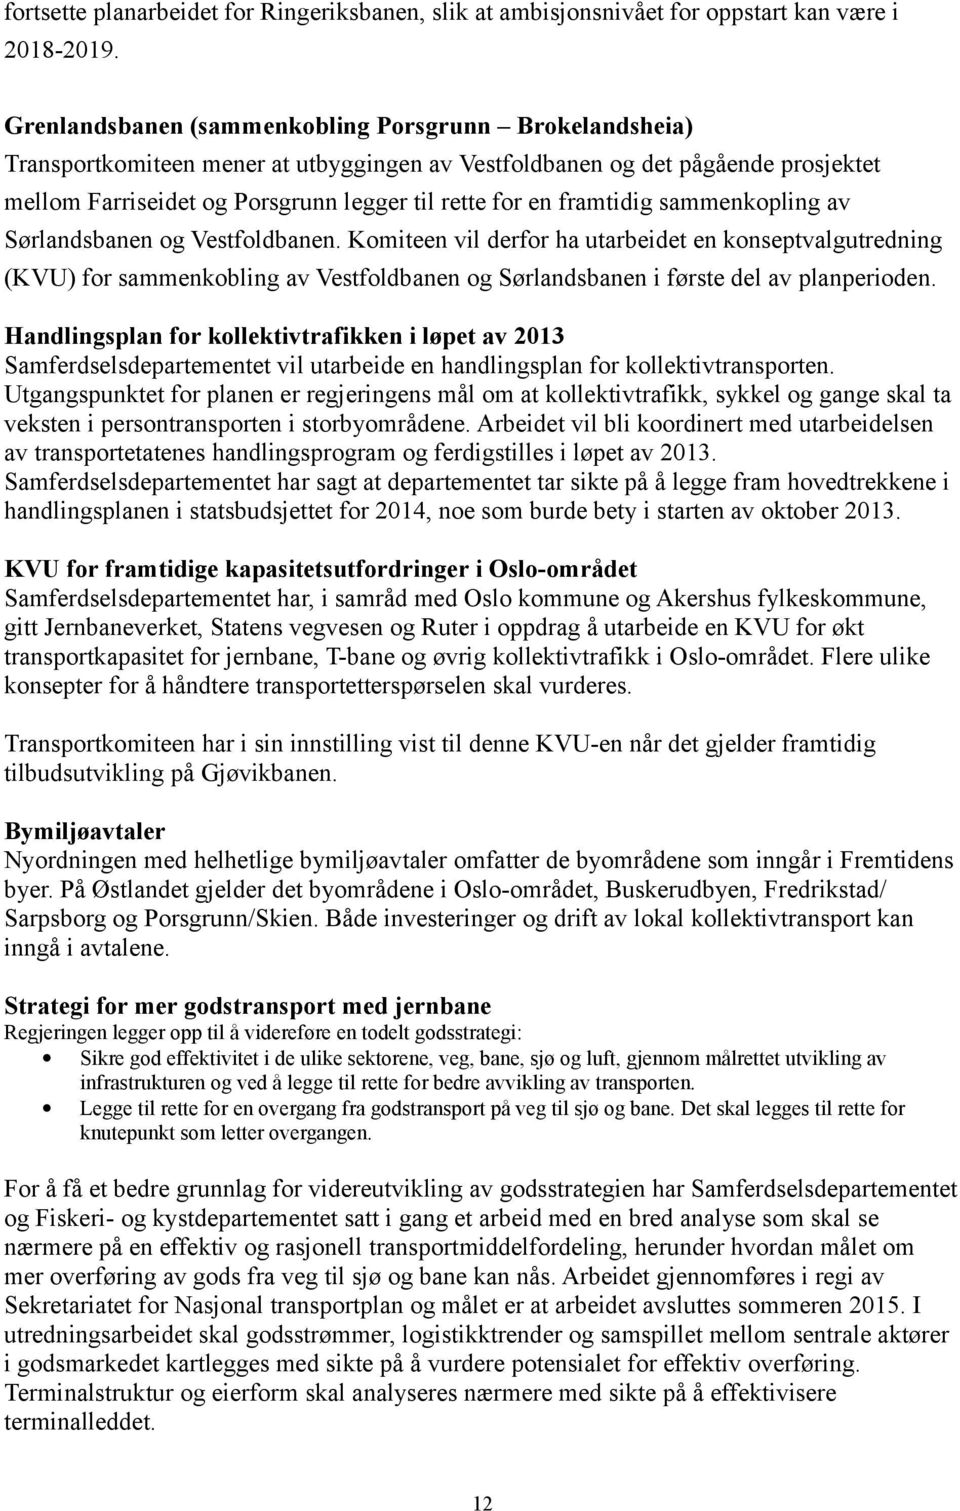 framtidig sammenkopling av Sørlandsbanen og Vestfoldbanen.